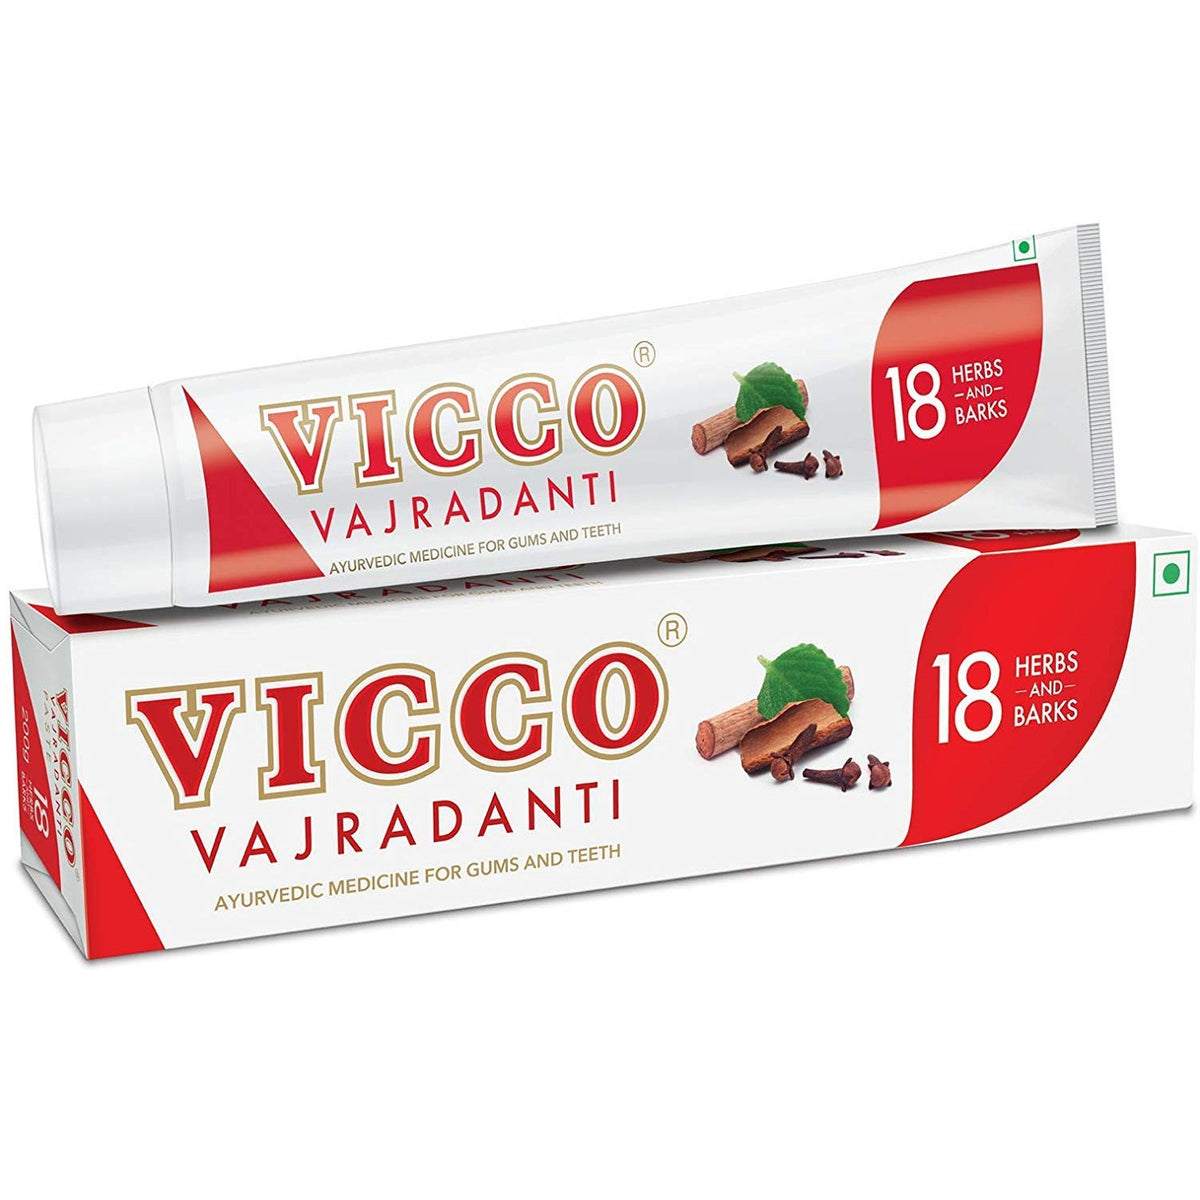 Vicco Vajradanti Ayurvedic Medicine For Healthy Gums and Teeth Regular Toothpaste